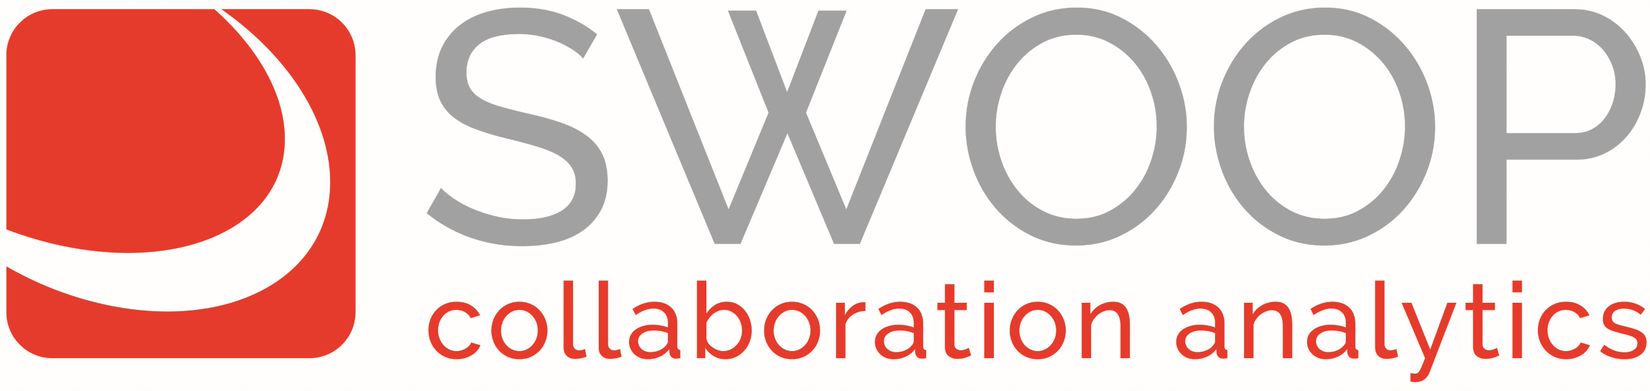 Swoop Collaboration Analytics Logo